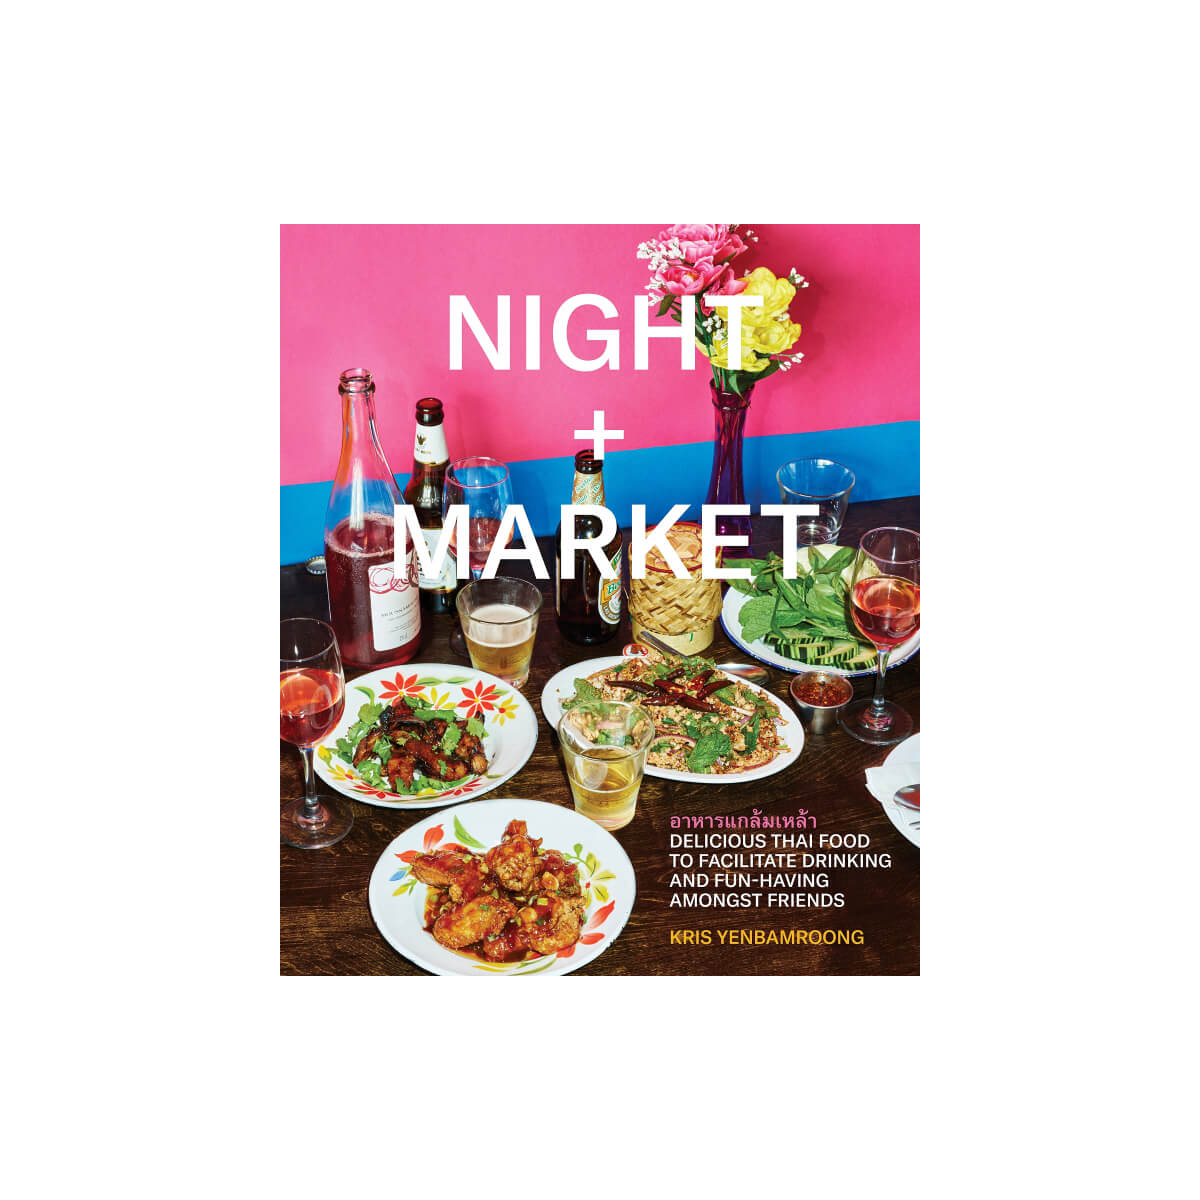 Night + Market cookbook